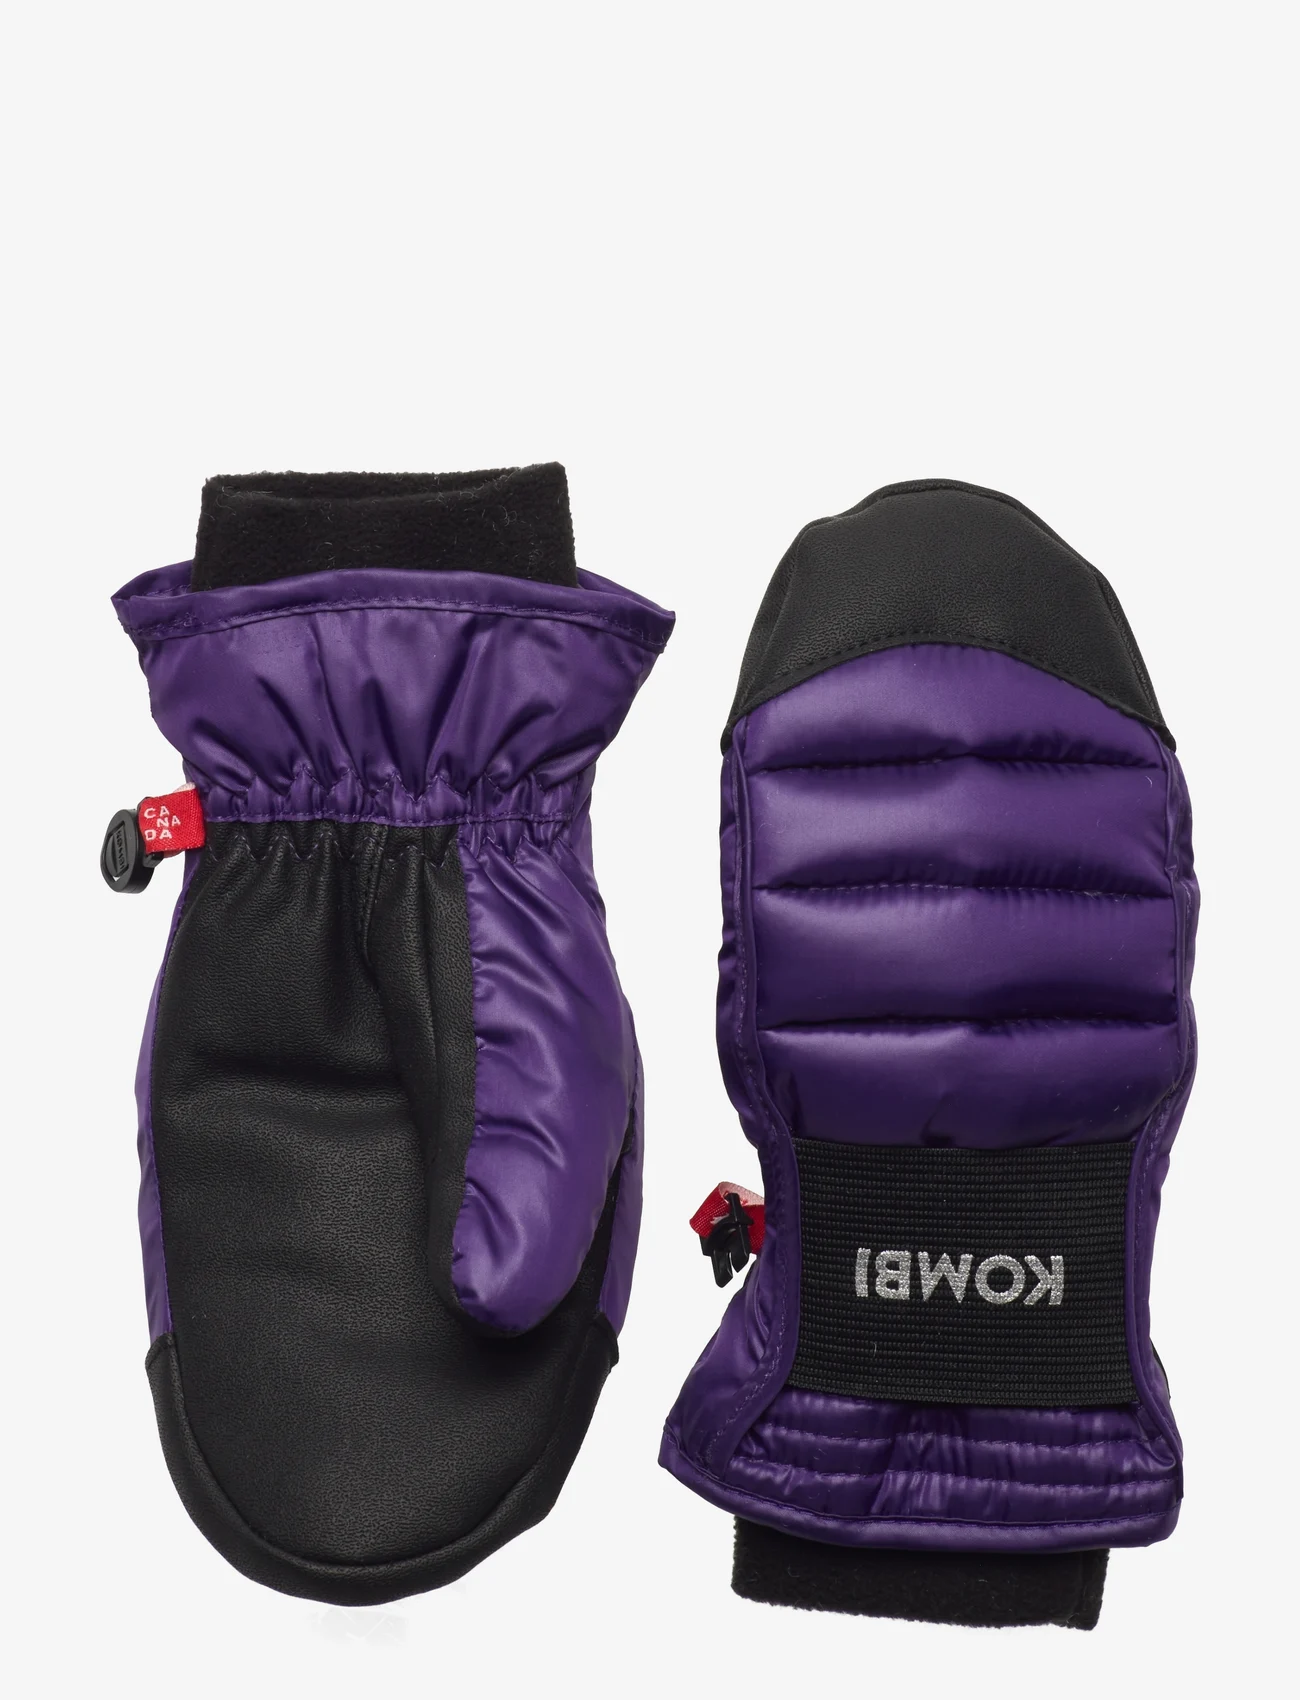 Kombi - HOFT JUNIOR MITT - czapki i rękawiczki - violet indigo - 0